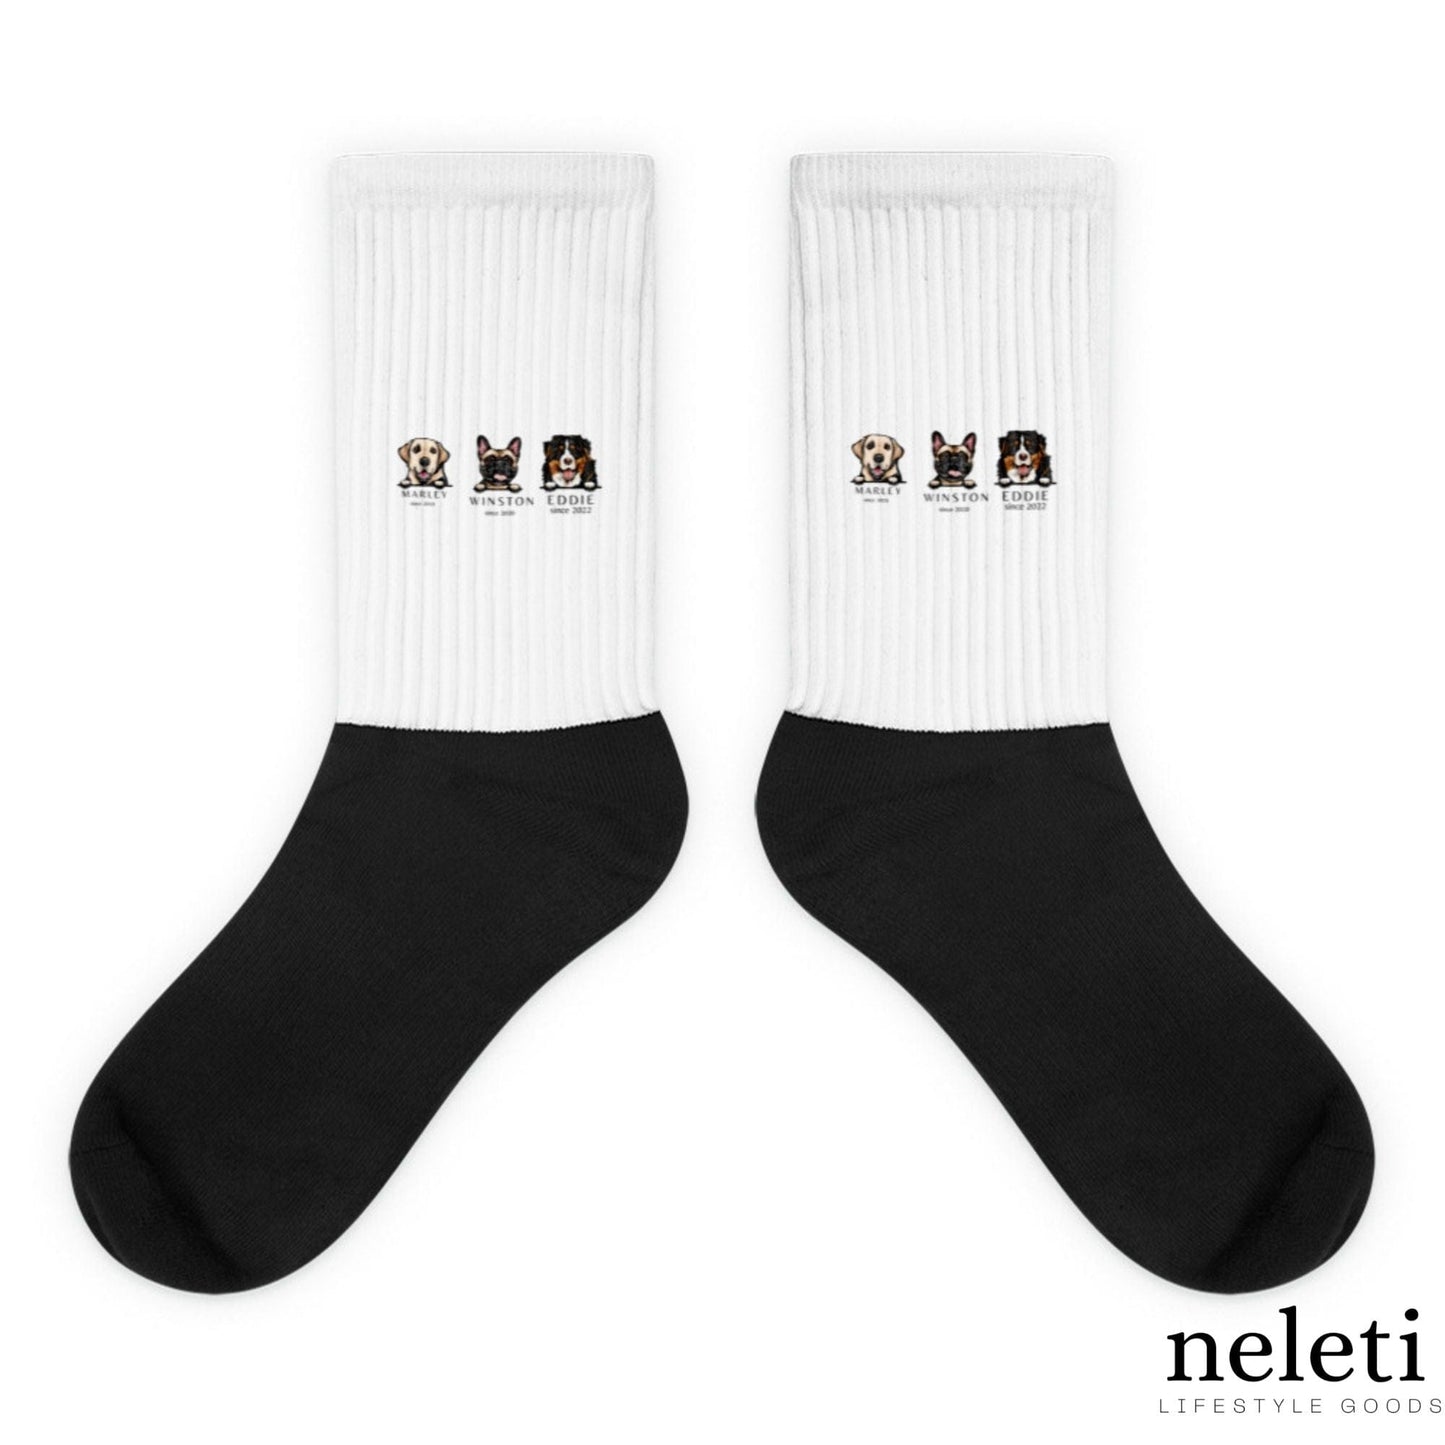    neleti.com-custom-socks-for-dog-lovers